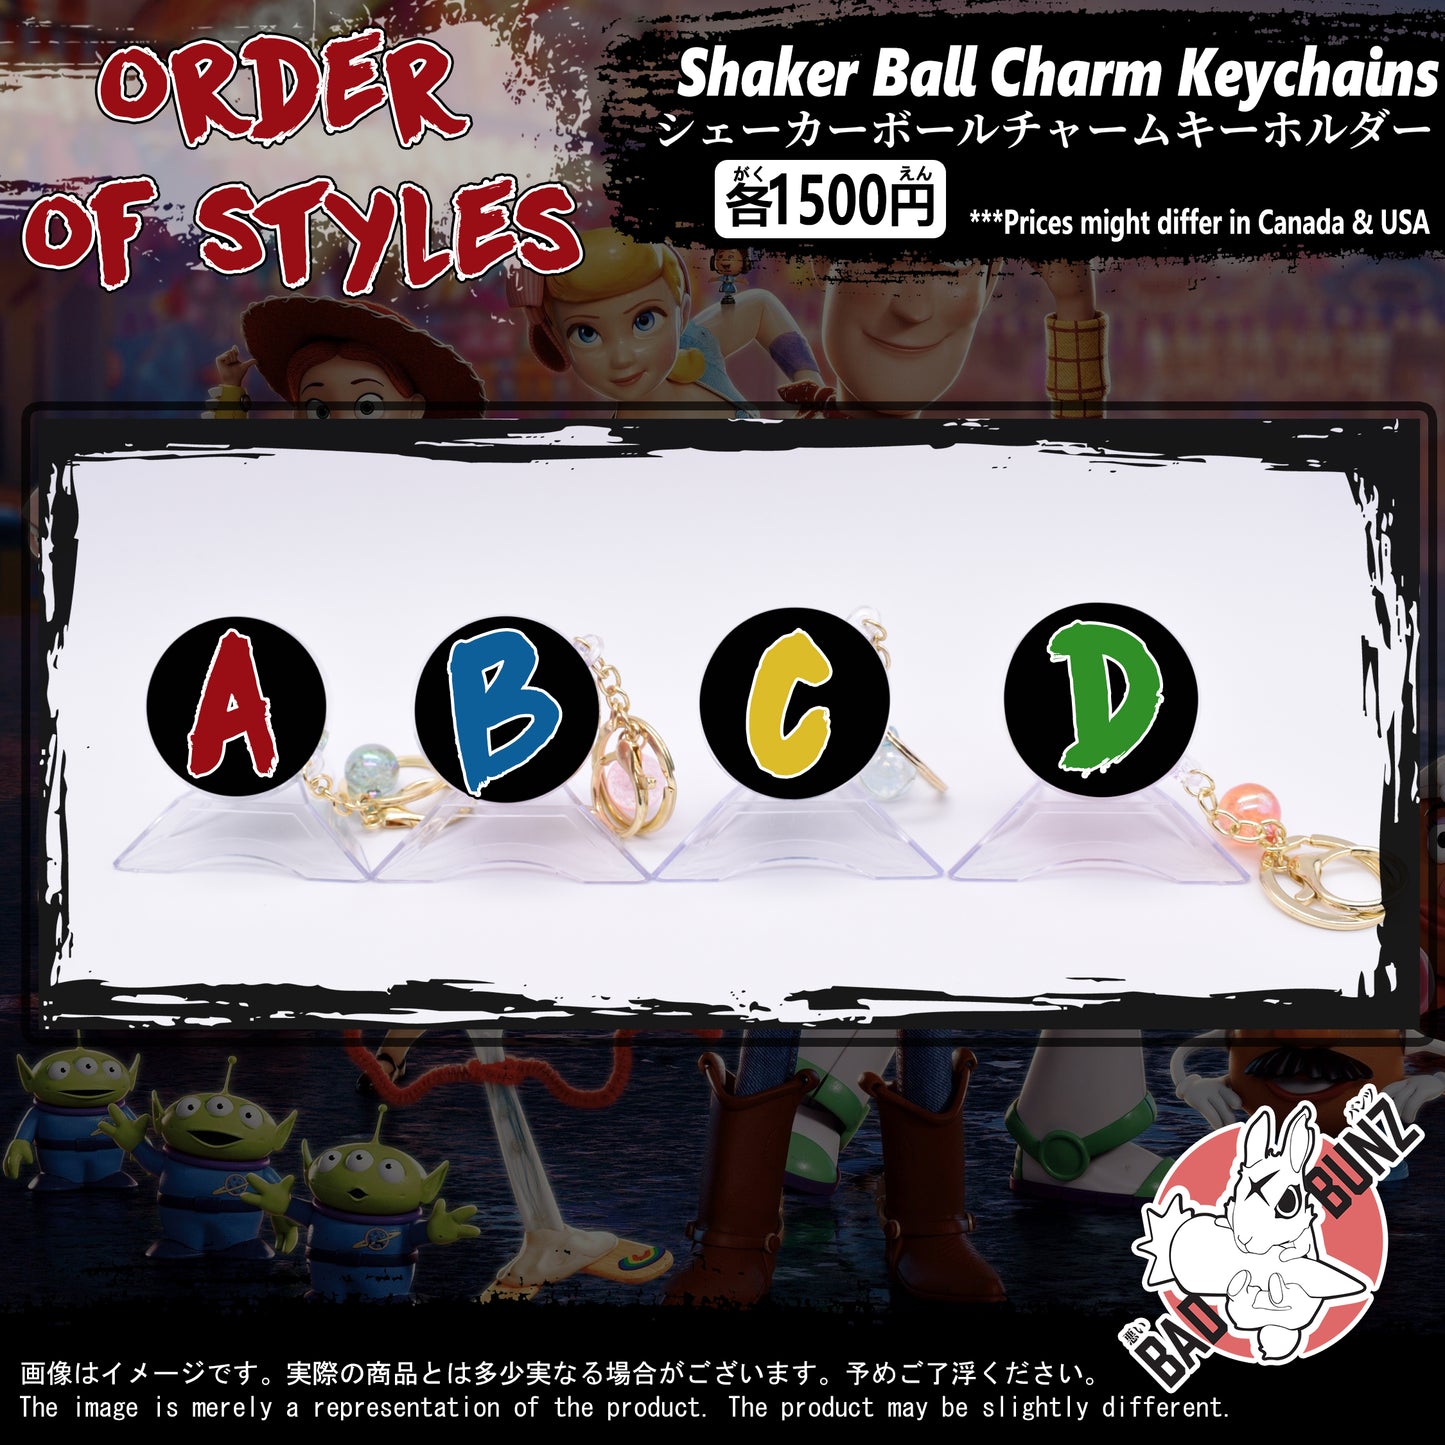 (TTR-01BALL) Studio Ghibli Movie Shaker Ball Charm Keychain (0, 0, 0, 0)